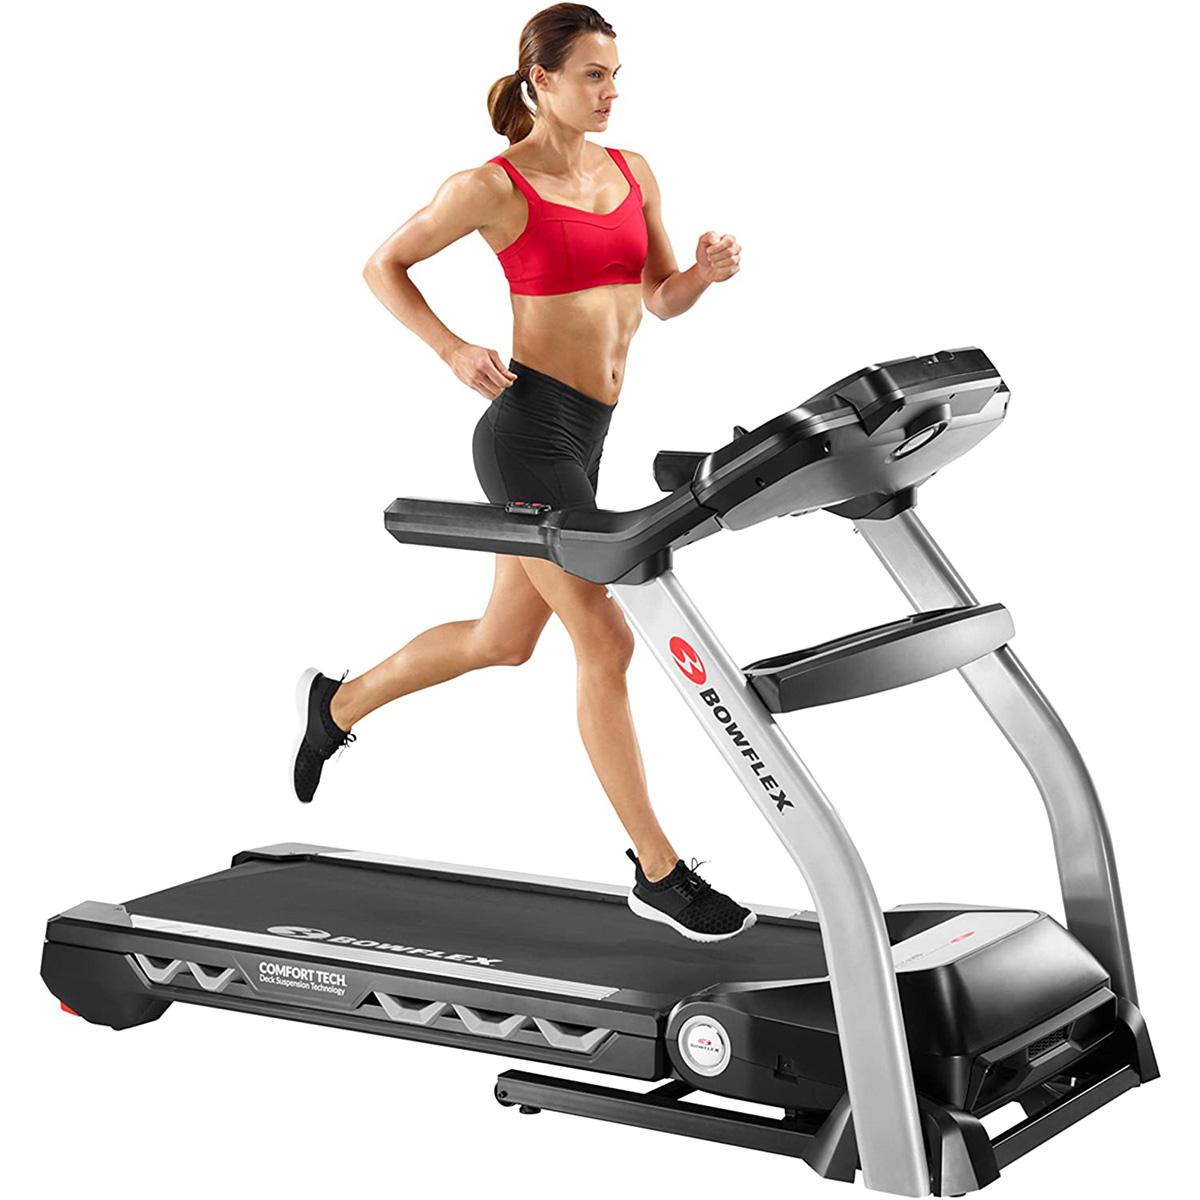 Bowflex BXT216 Treadmill for $1399.99 Shipped